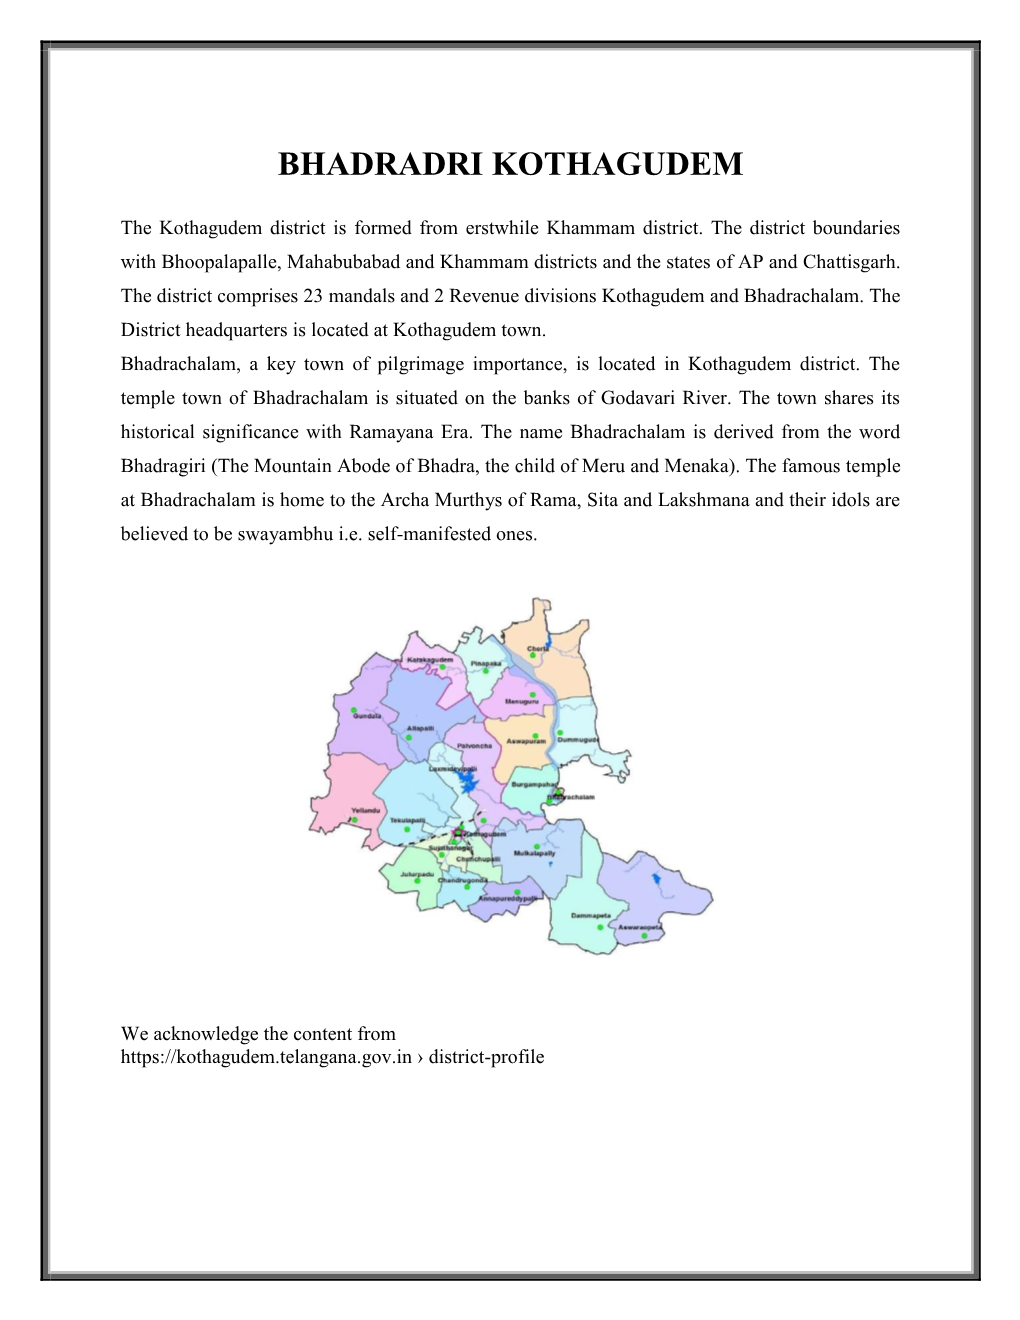 Bhadradri Kothagudem